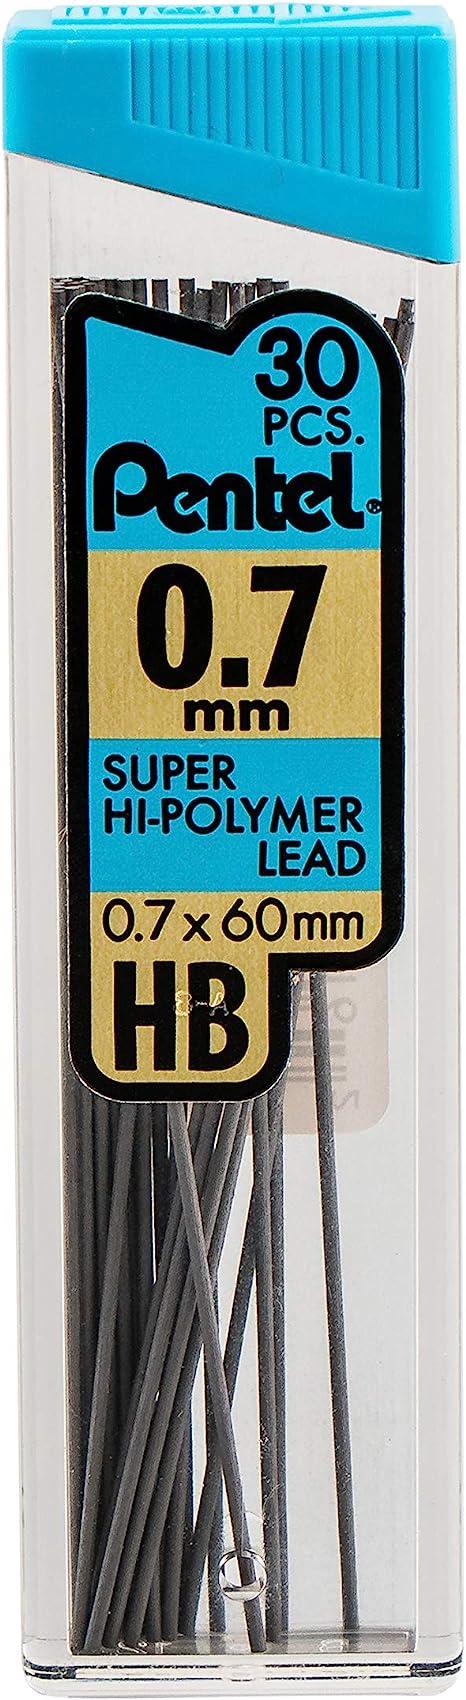 pentel super hi polymer leads 0.7 mm  pentel b0016p2a5g